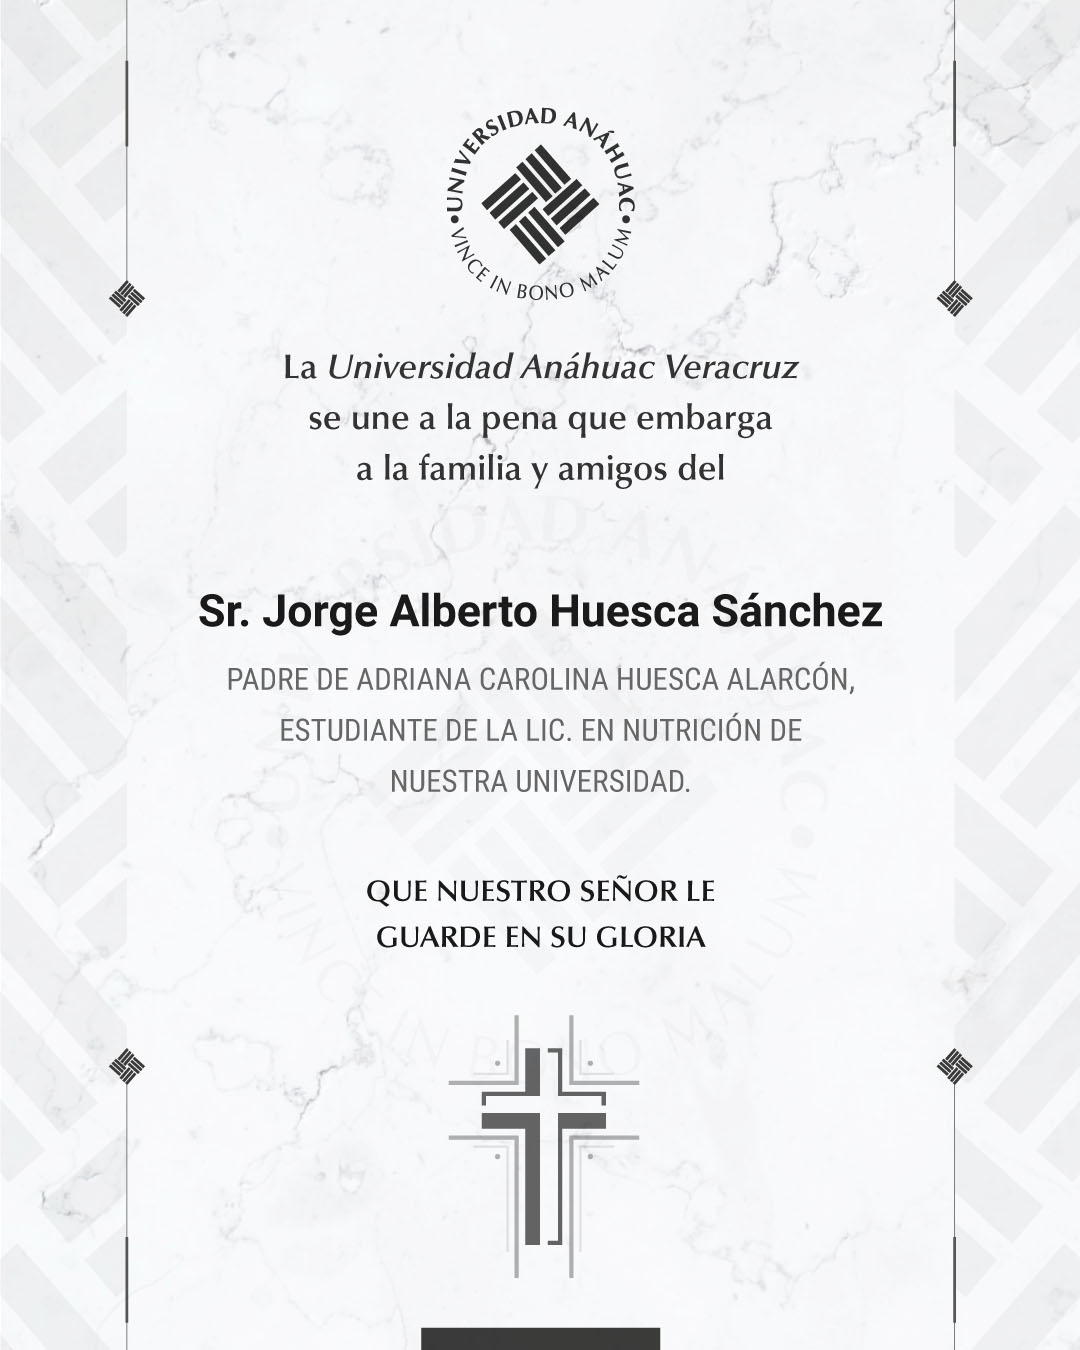 9 / 18 - Sr. Jorge Alberto Huesca Sánchez